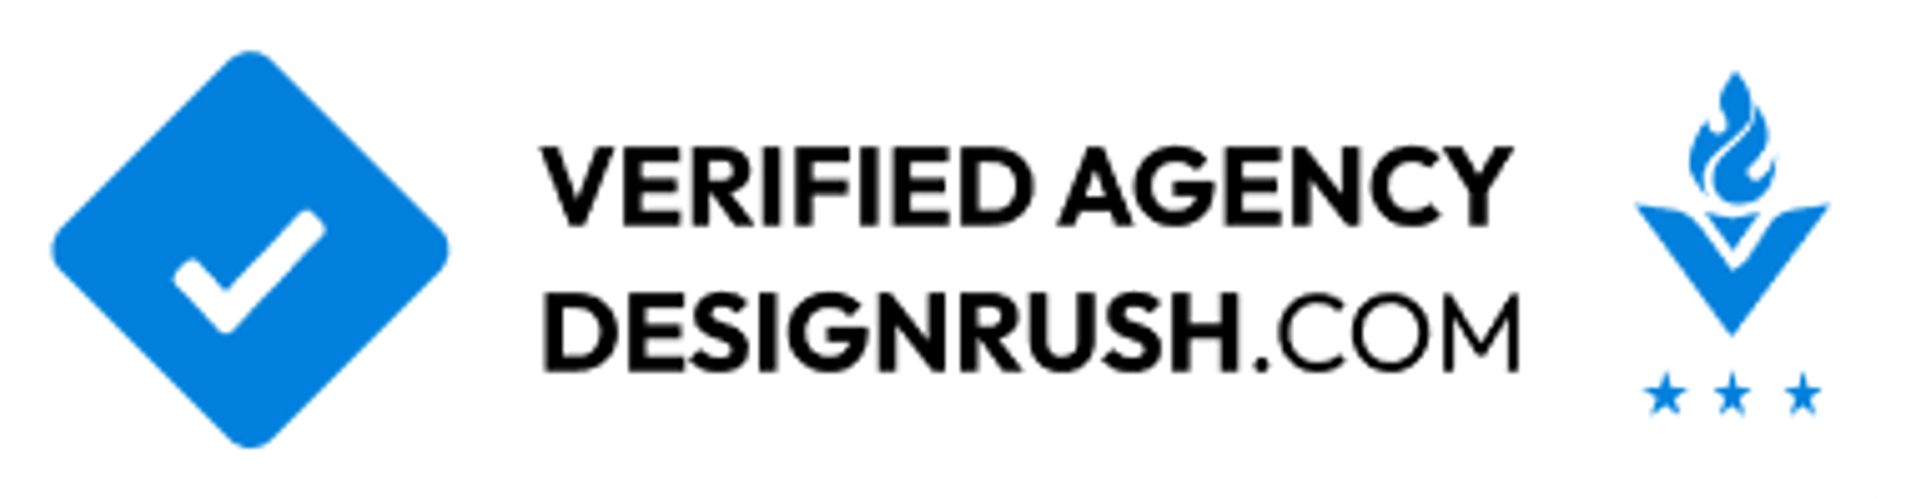 Design Rush logo